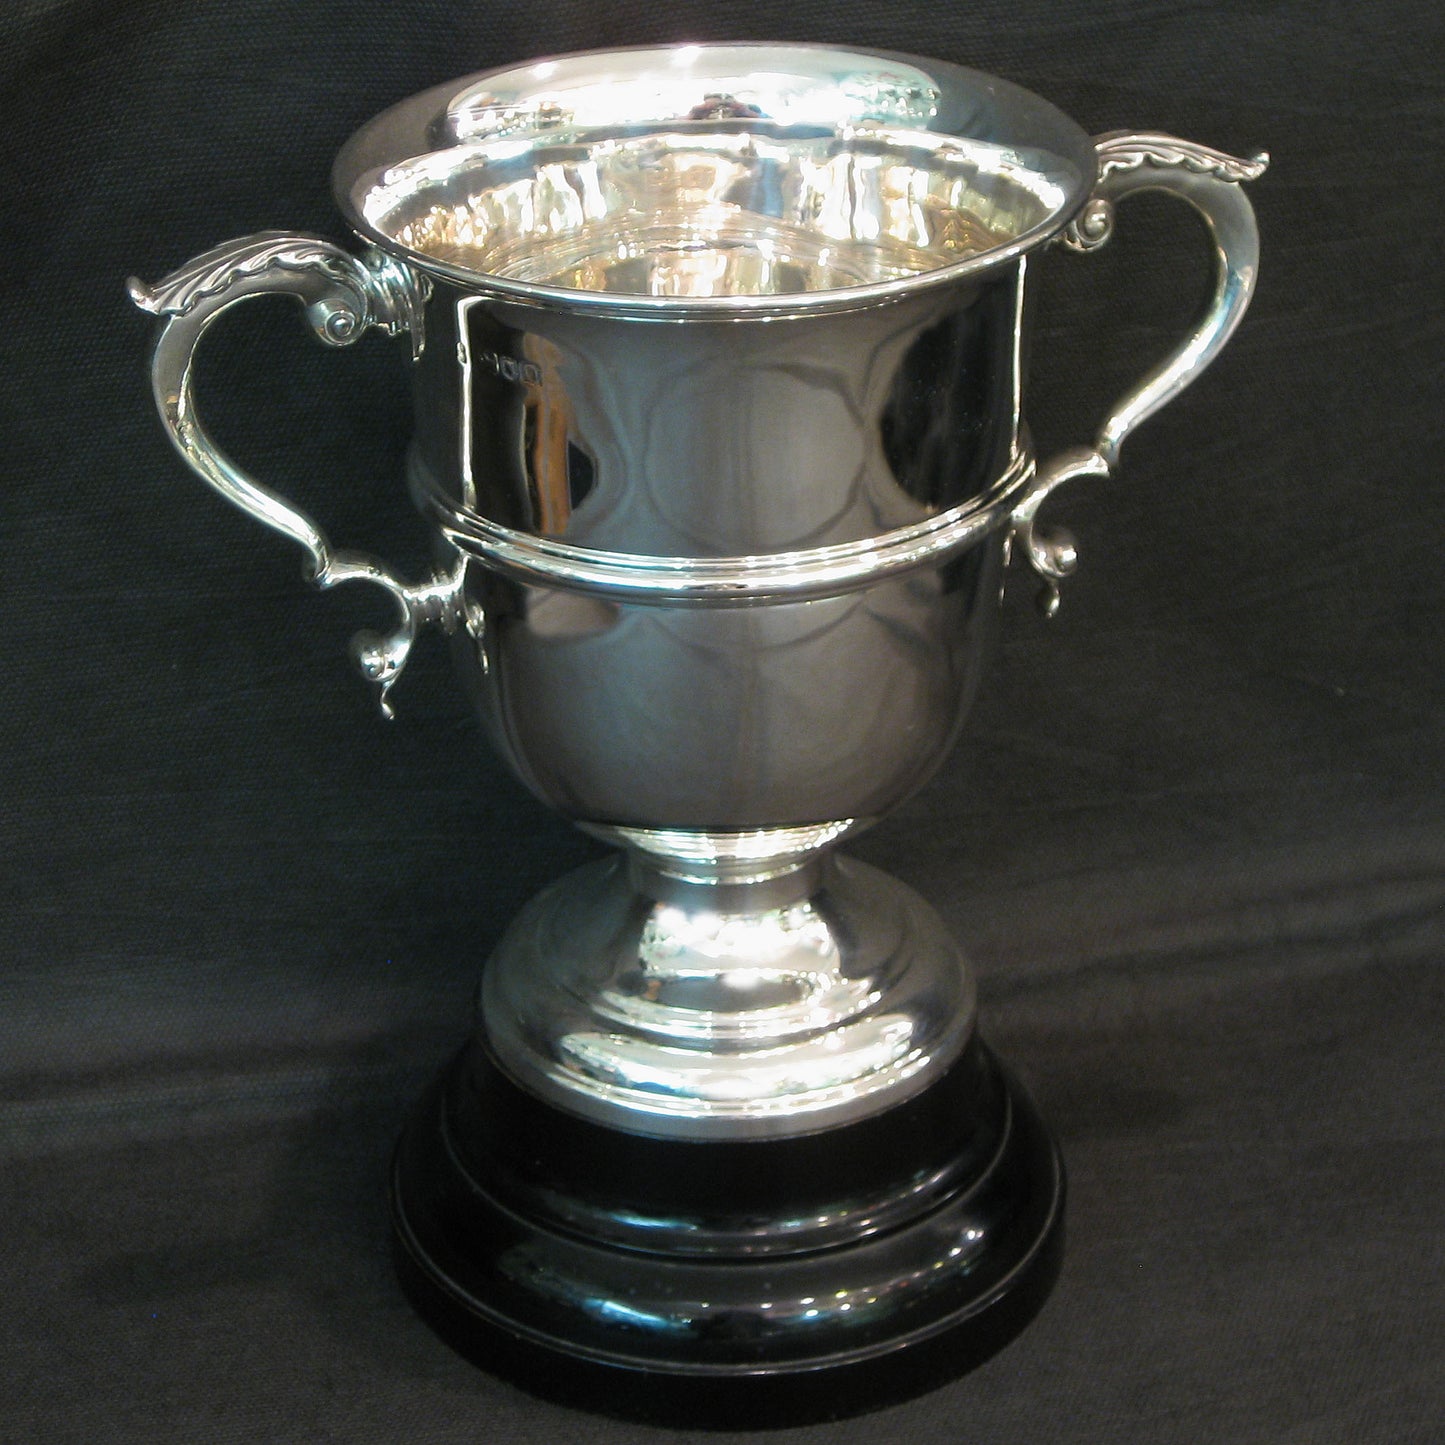 An elegant Silver Trophy on wooden base.